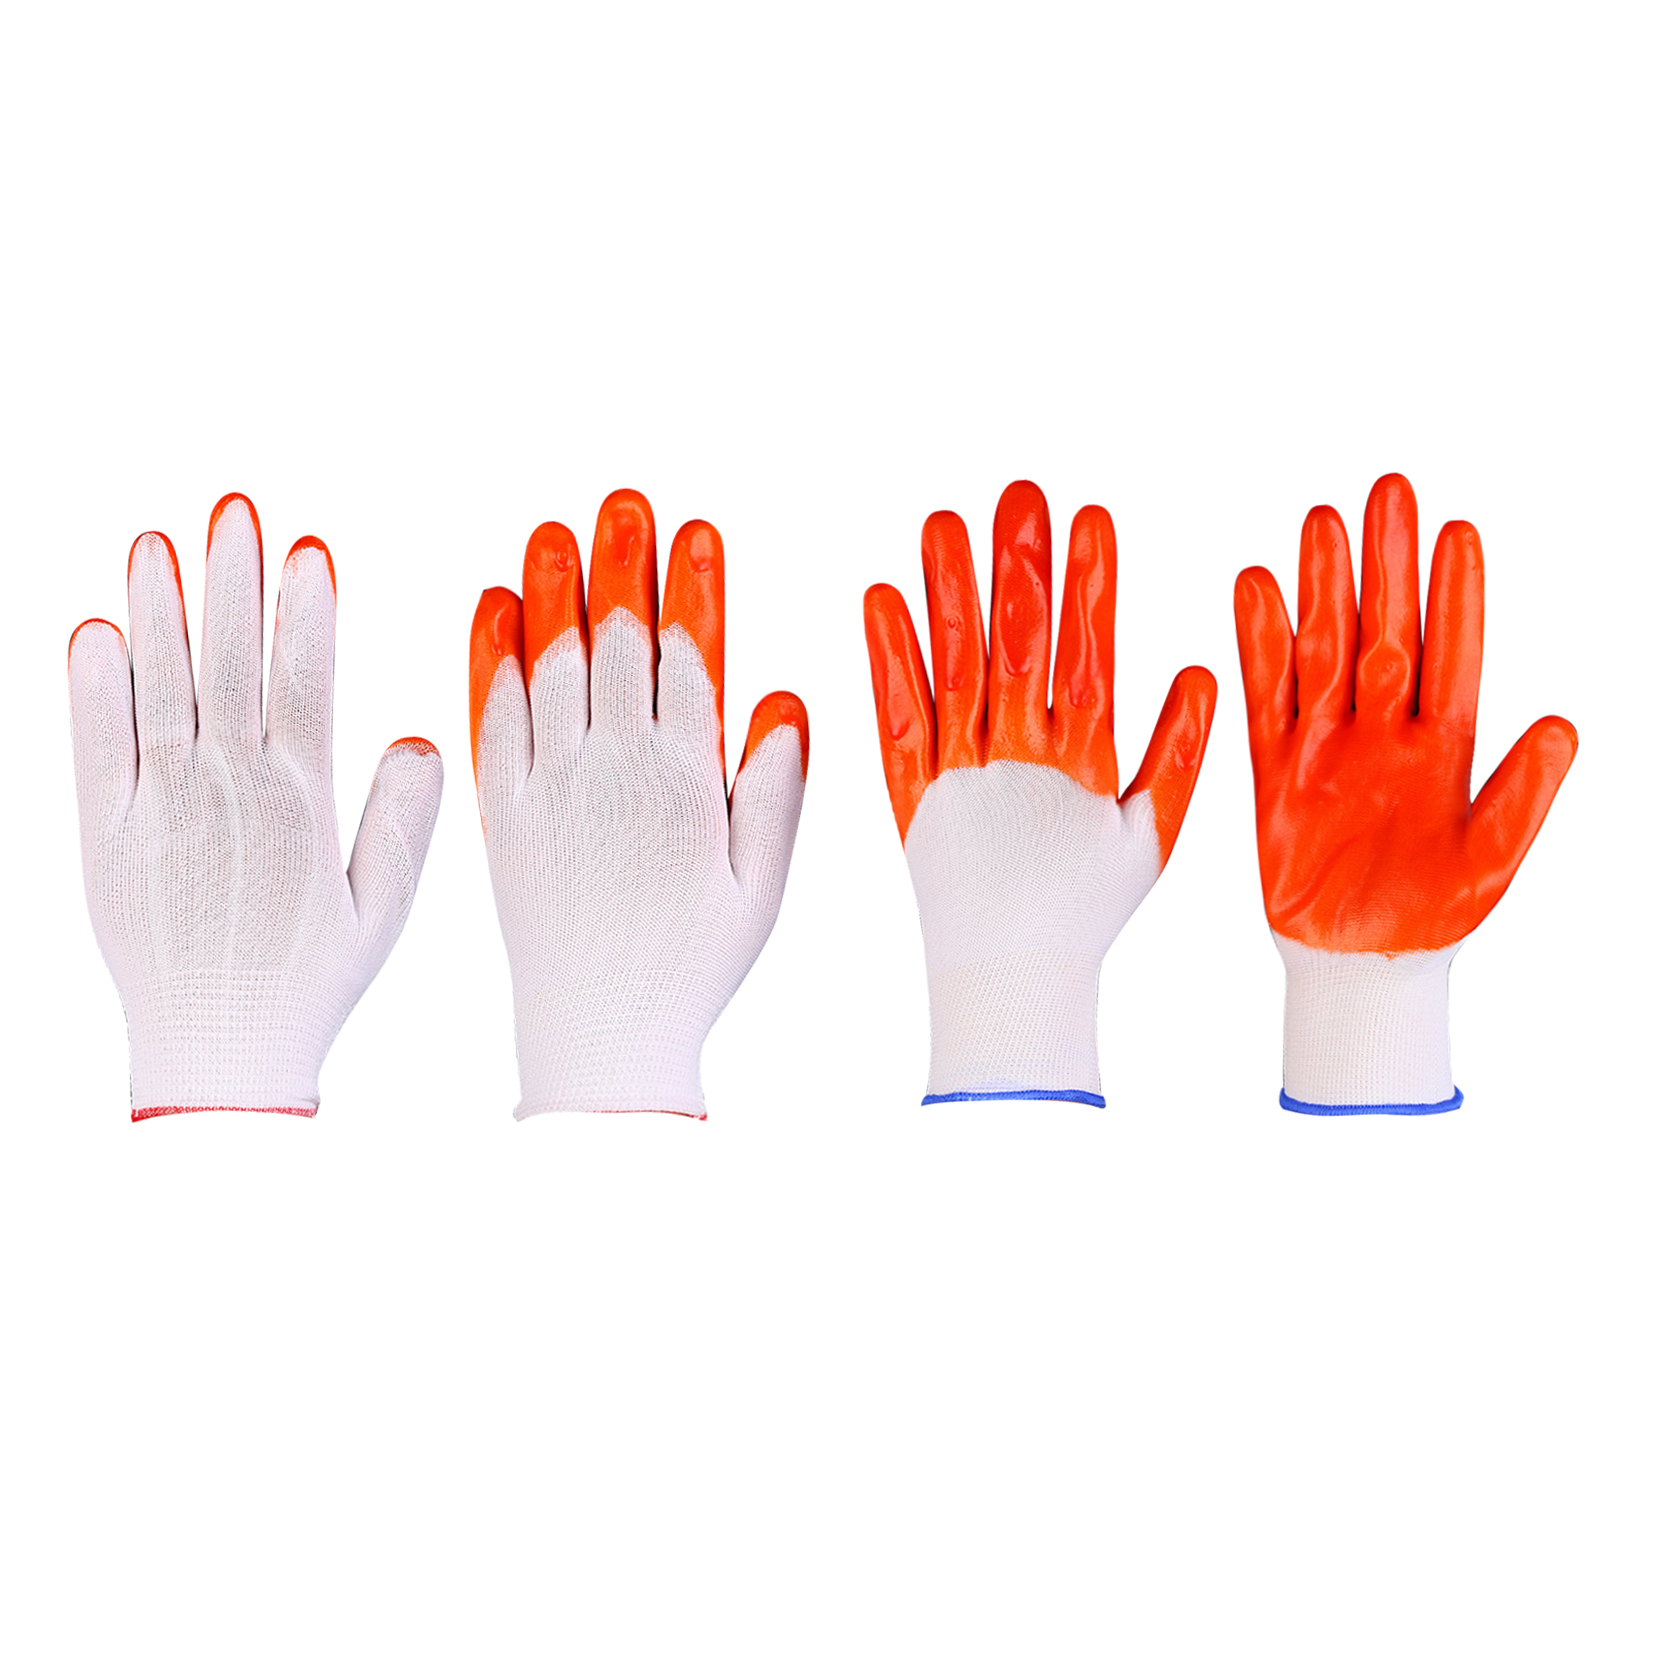 Pvc Coated Orange Nylon Knitted Protective Work Glove